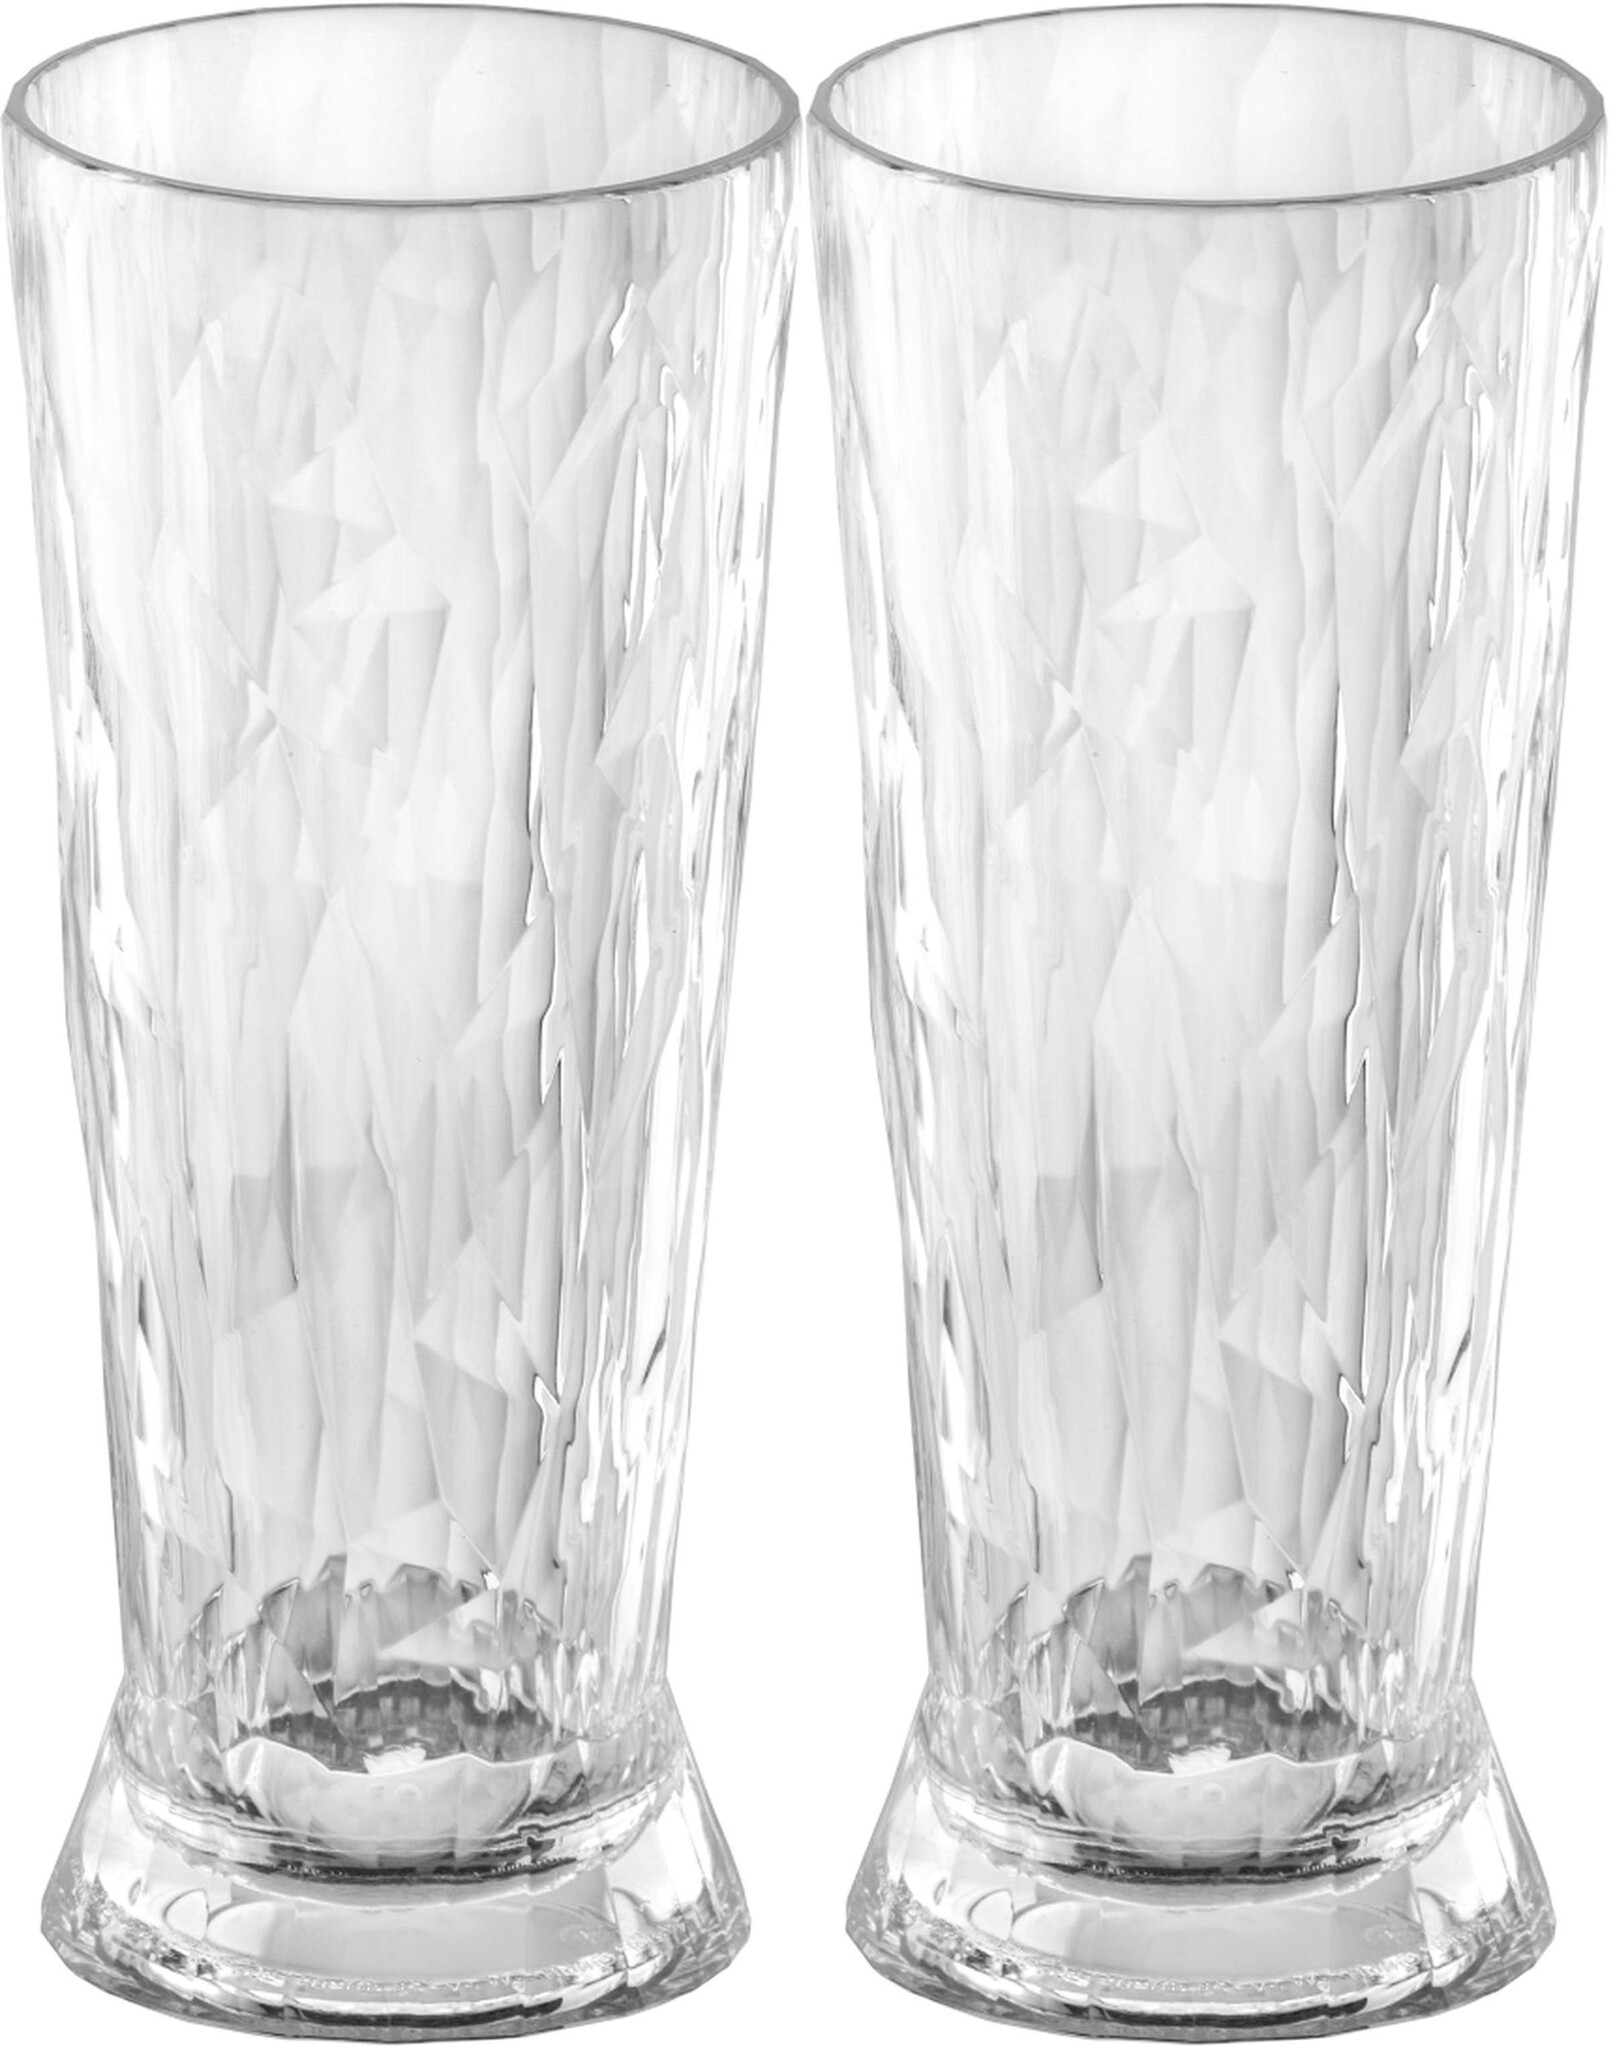 Koziol Superglas Club No. 10 Bier Glas 300 ml Set van 2 Stuks